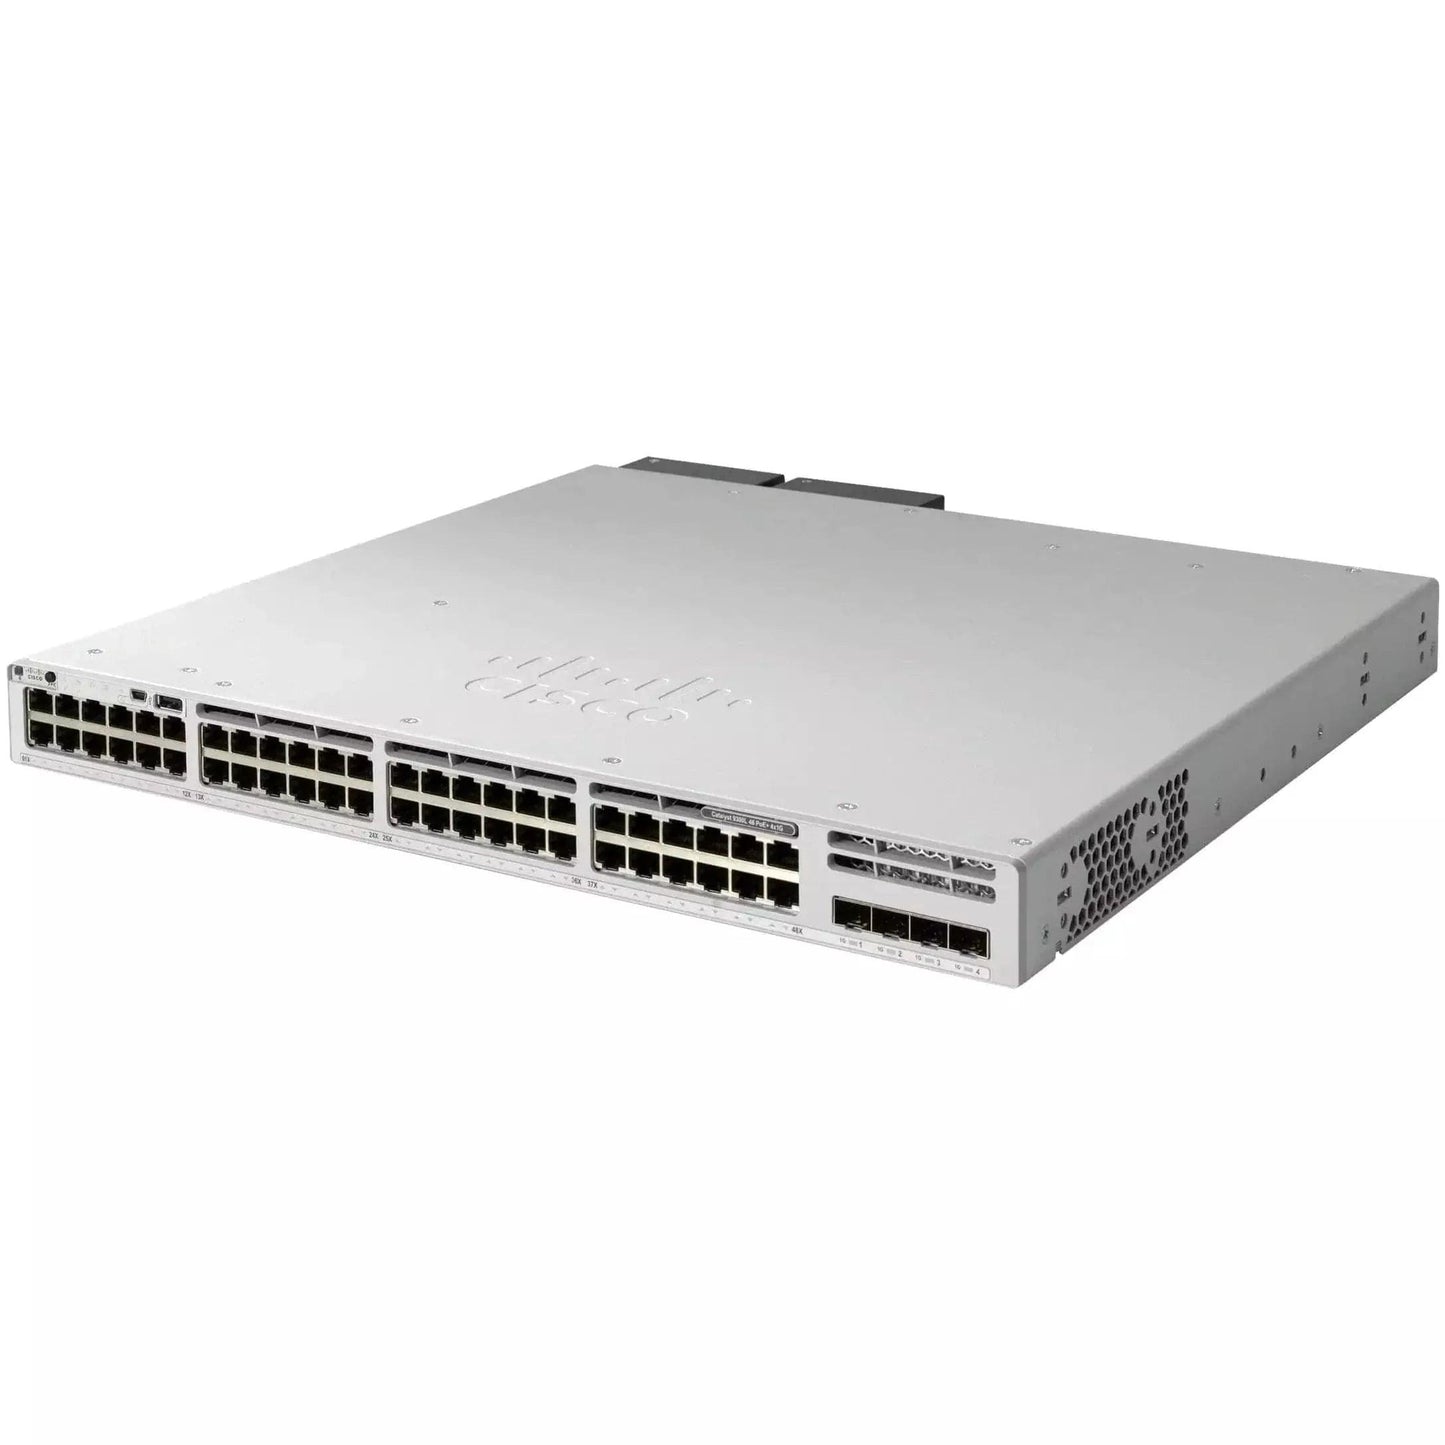 Cisco Catalyst 9300 48-port fixed uplinks UPOE, 12x mGig (100M/1G/2.5G/5G/10G) + 36x 10M/100M/1G, 4x 10G uplinks, Network Essentials - C9300L-48UXG-4X-E - Refurbished - C9300L-48UXG-4X-E-R - Reef Telecom